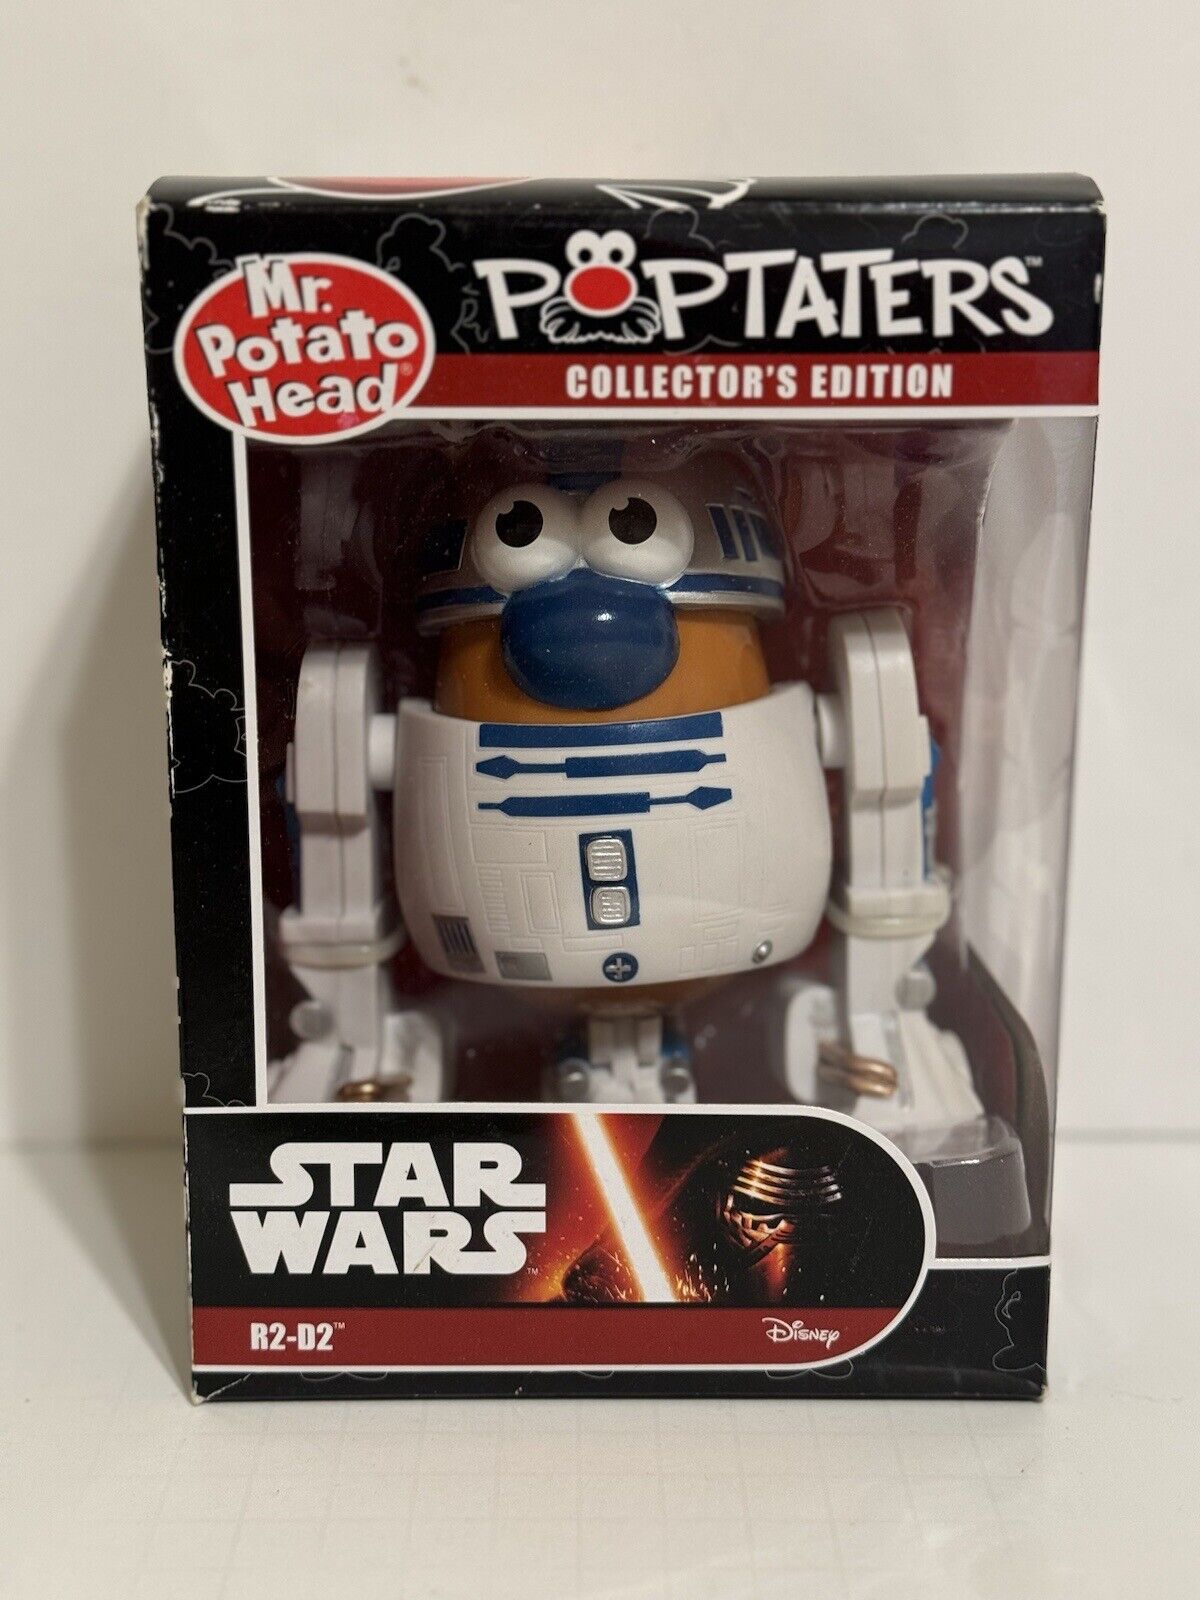 Star Wars Mr. Potato Head Pop Taters Collector's Edition - R2-D2 (New in Box)